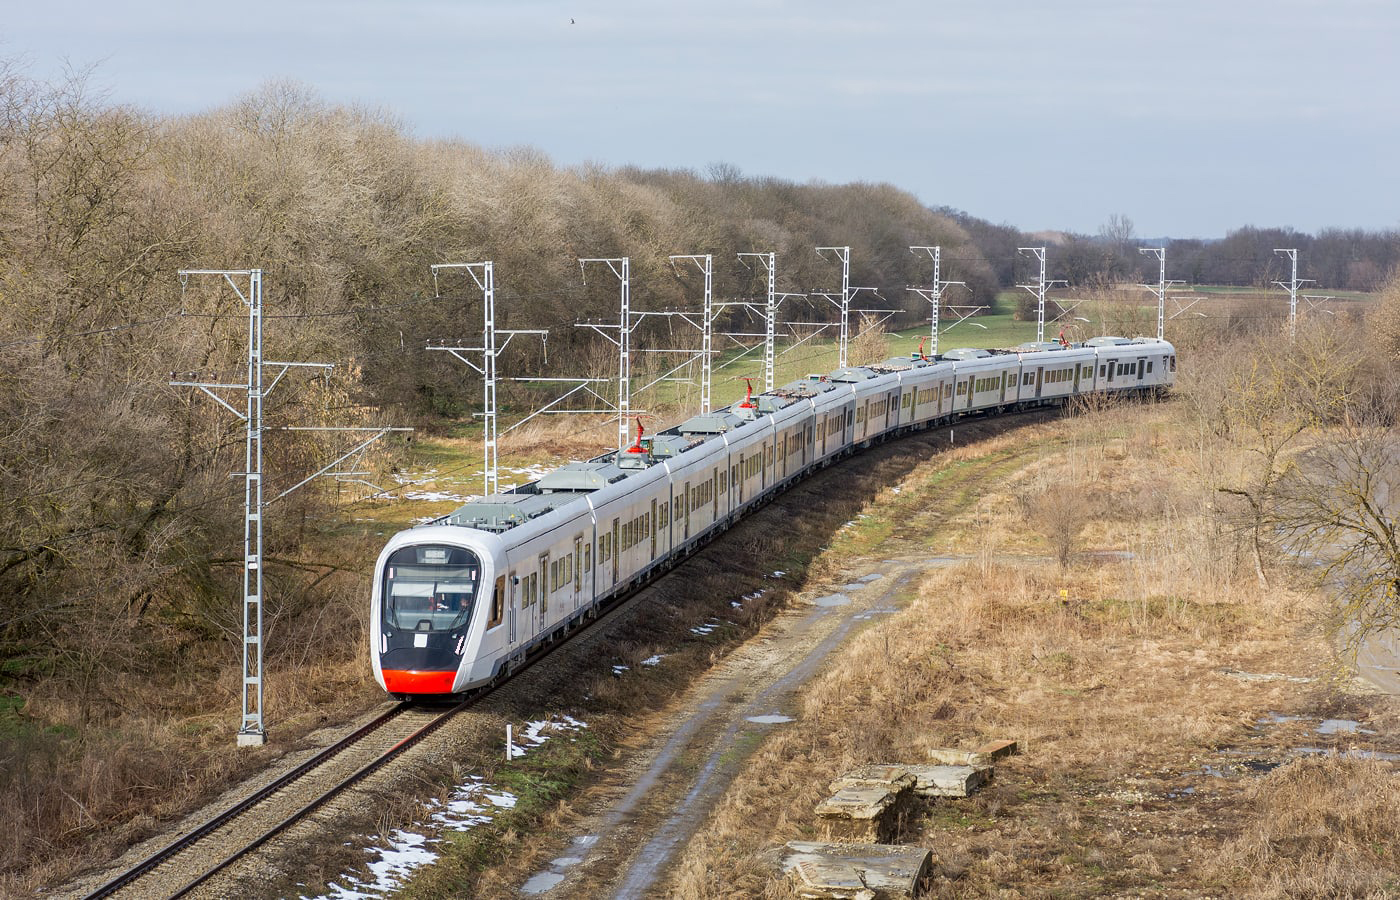 EG2ETv "Ivolga 3.0" electric train by TMH on trials